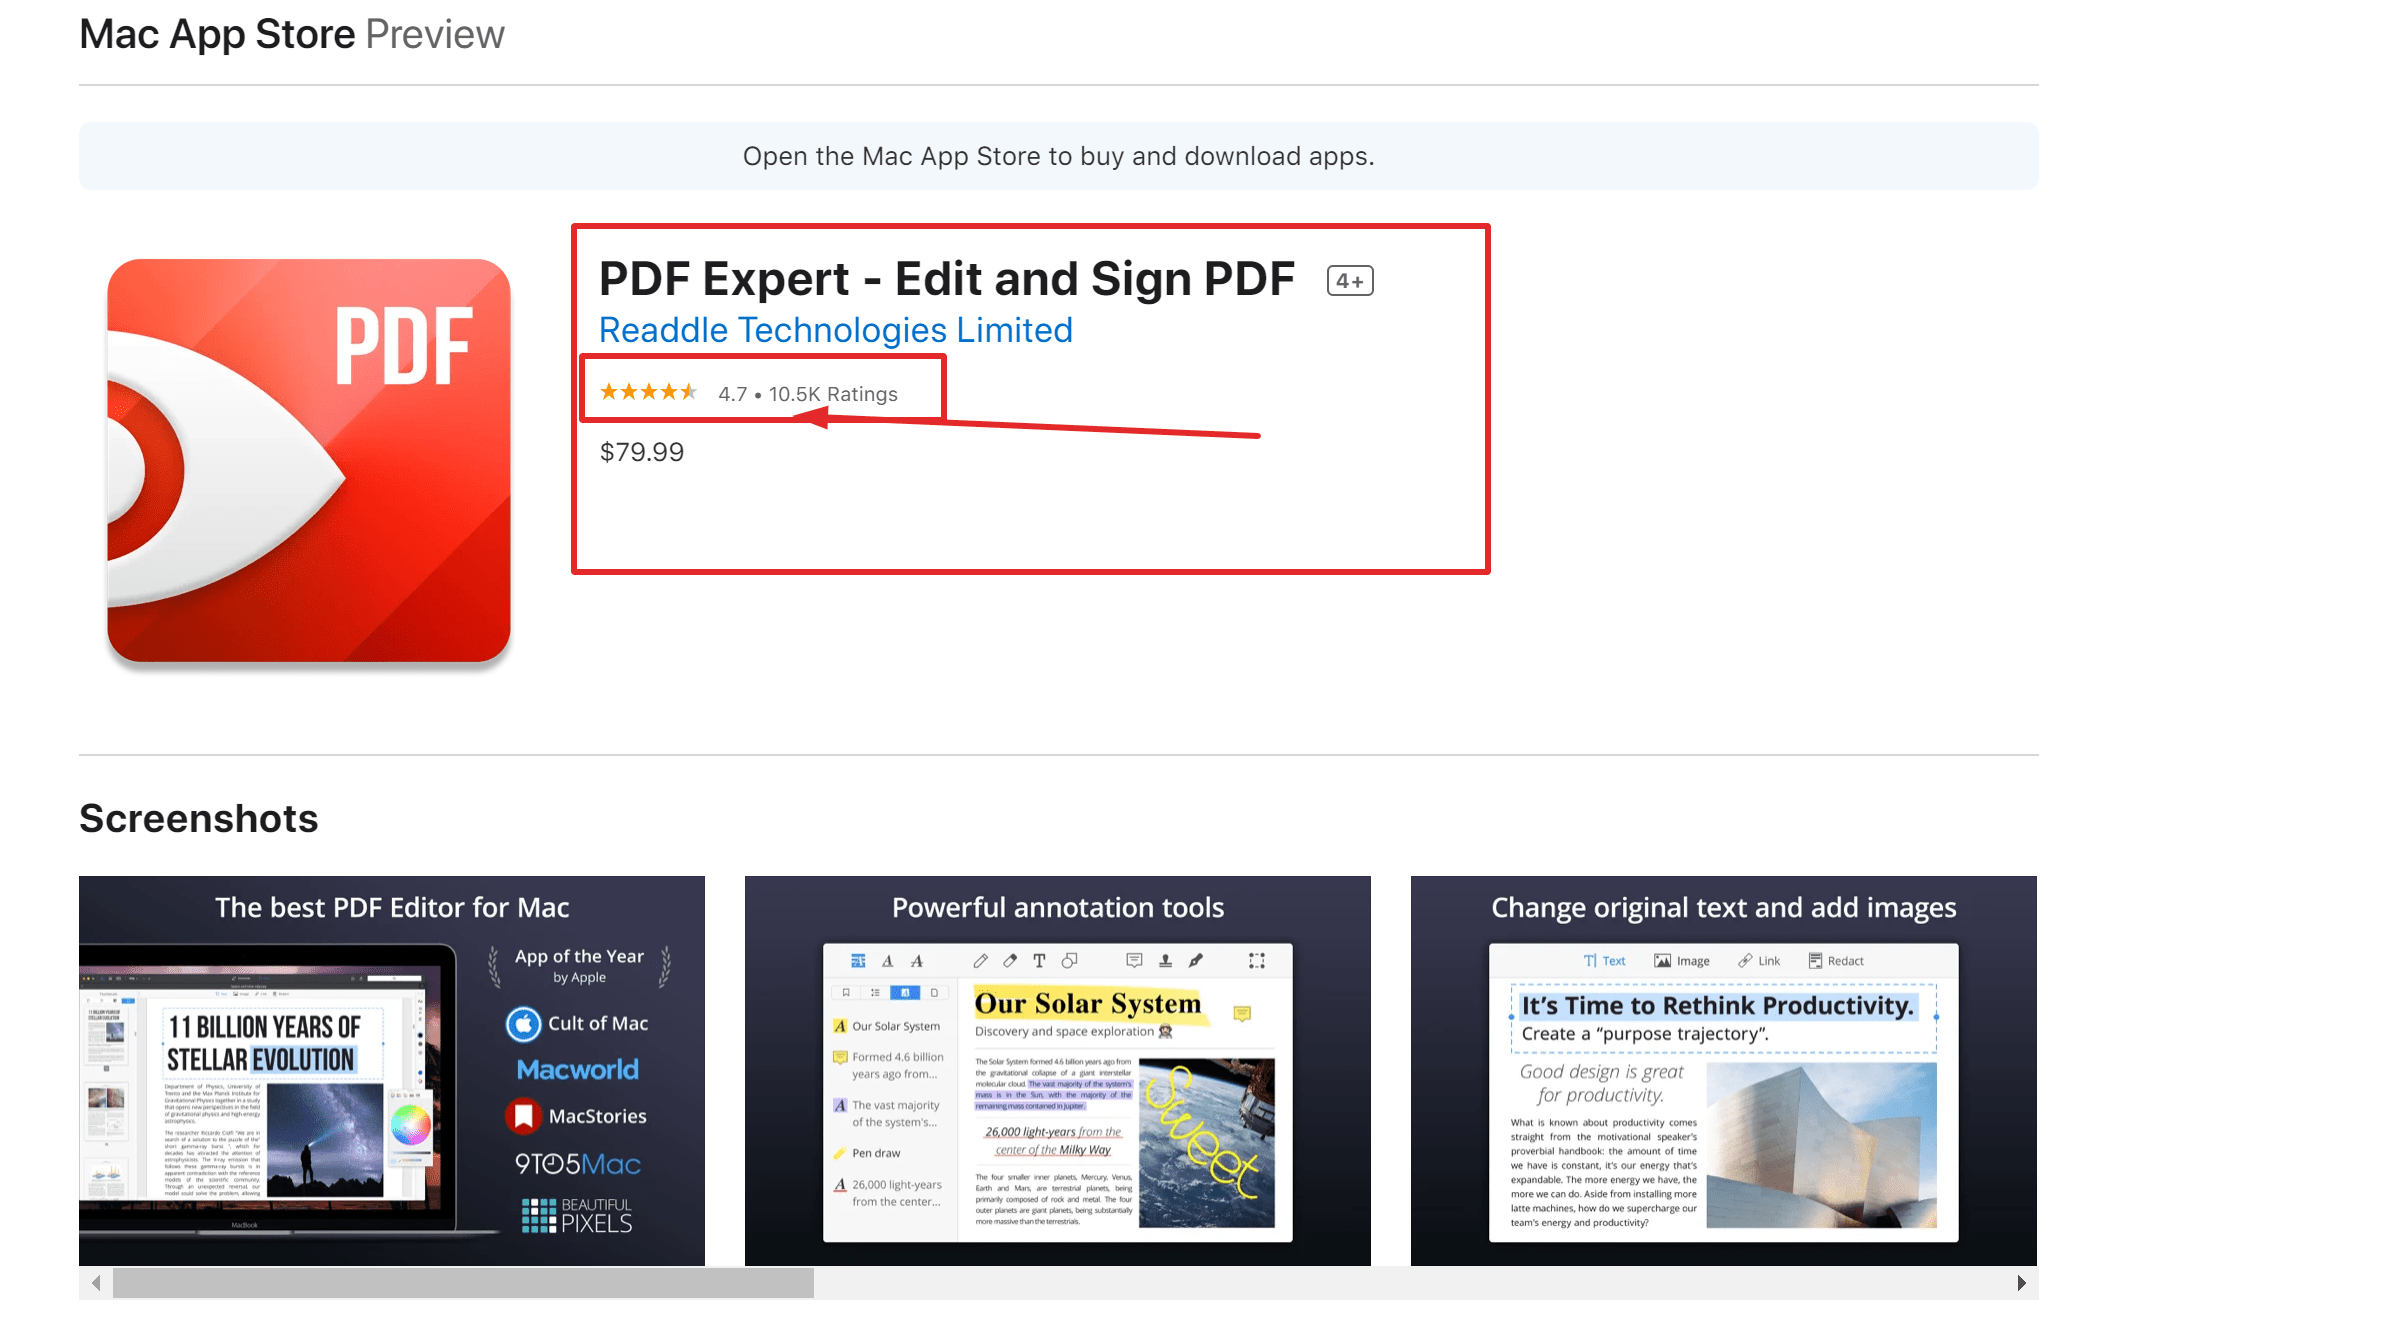 PDf expert reviews online